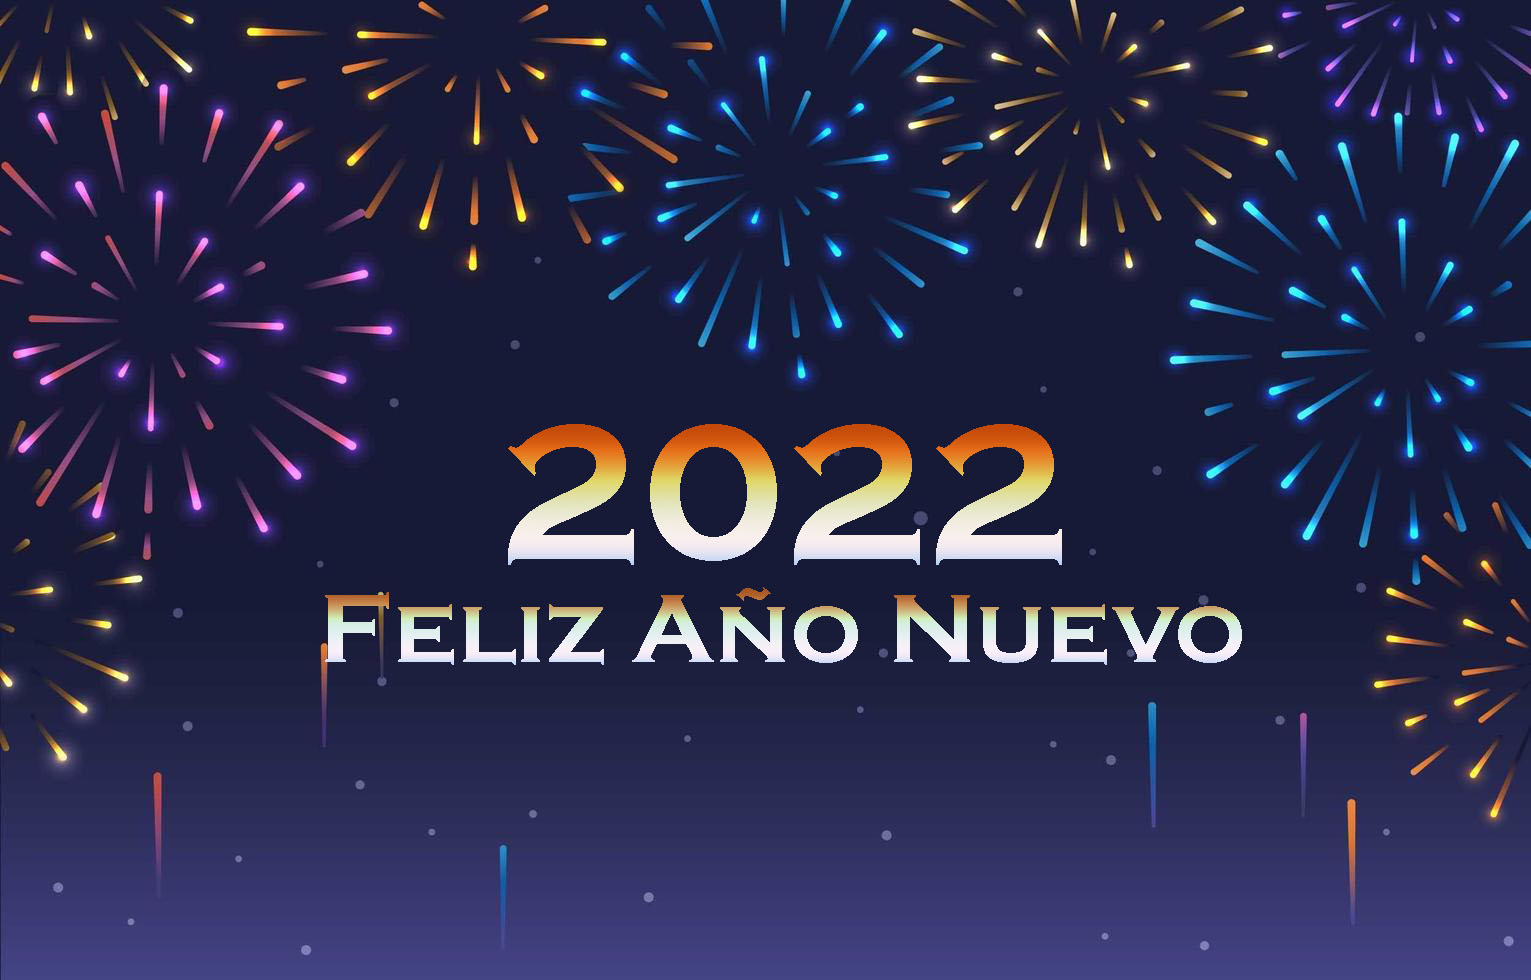 Feliz-Ano-Nuevo-2022-imagenes.jpeg